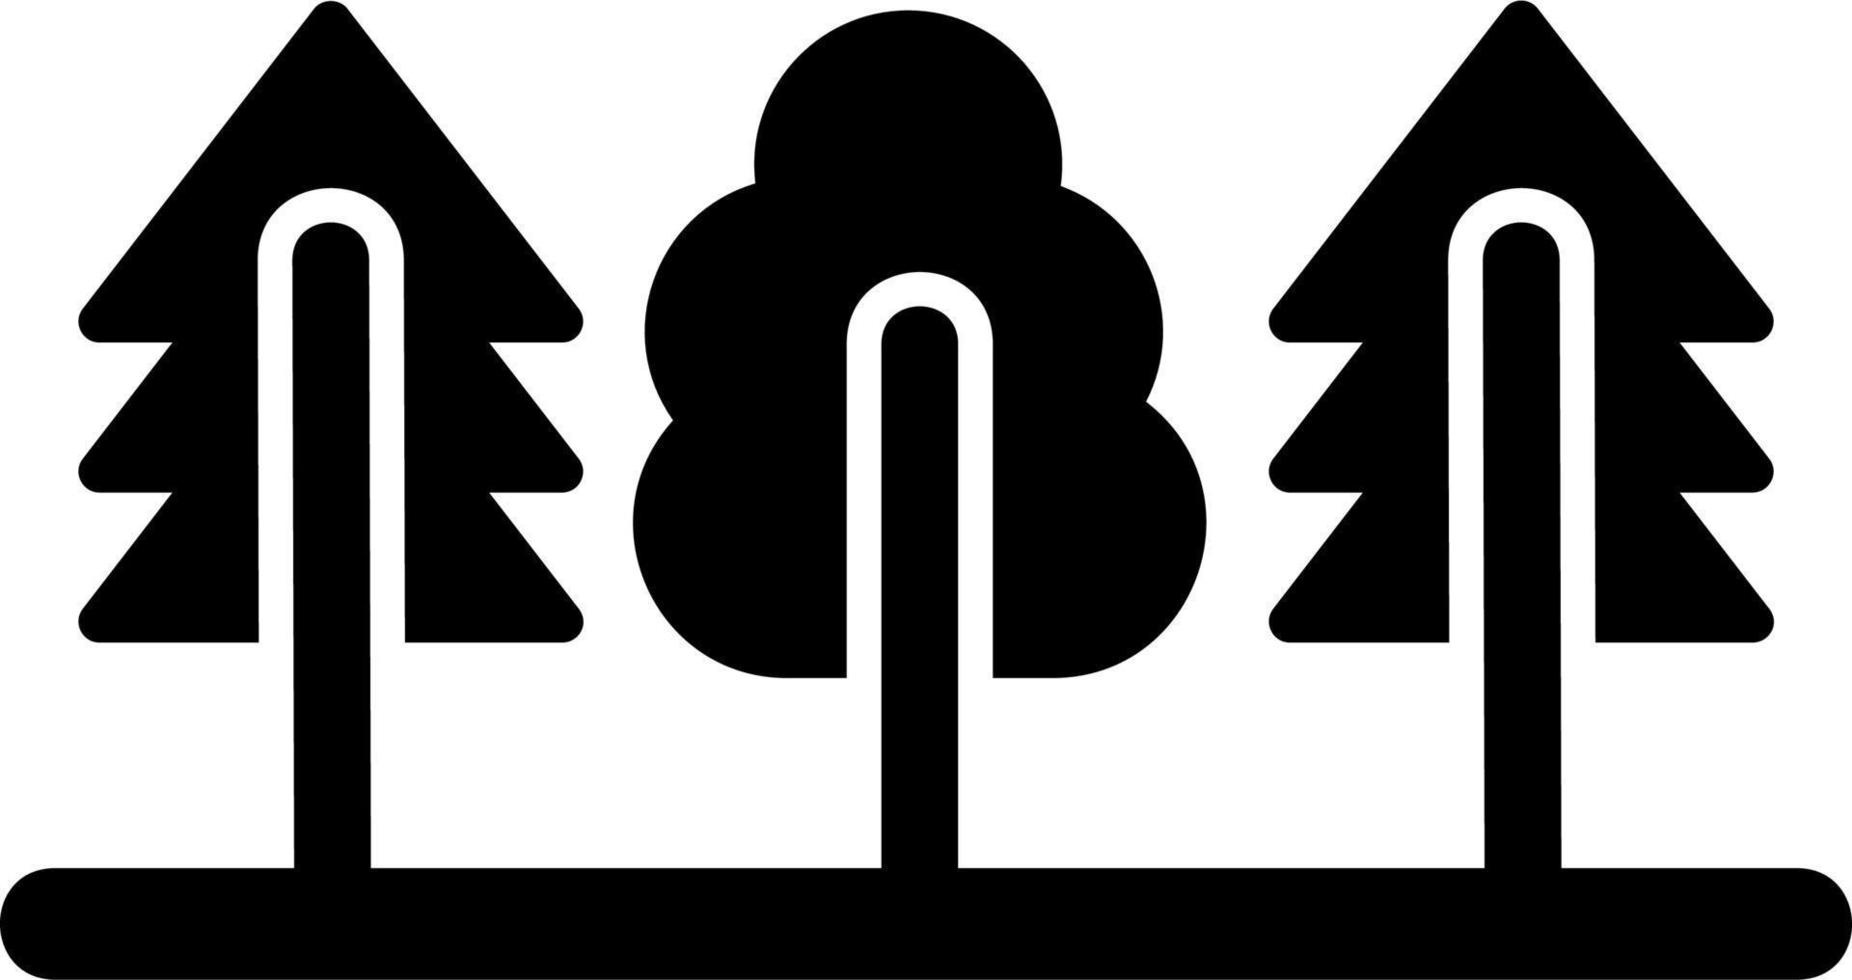 icono de vector de bosque